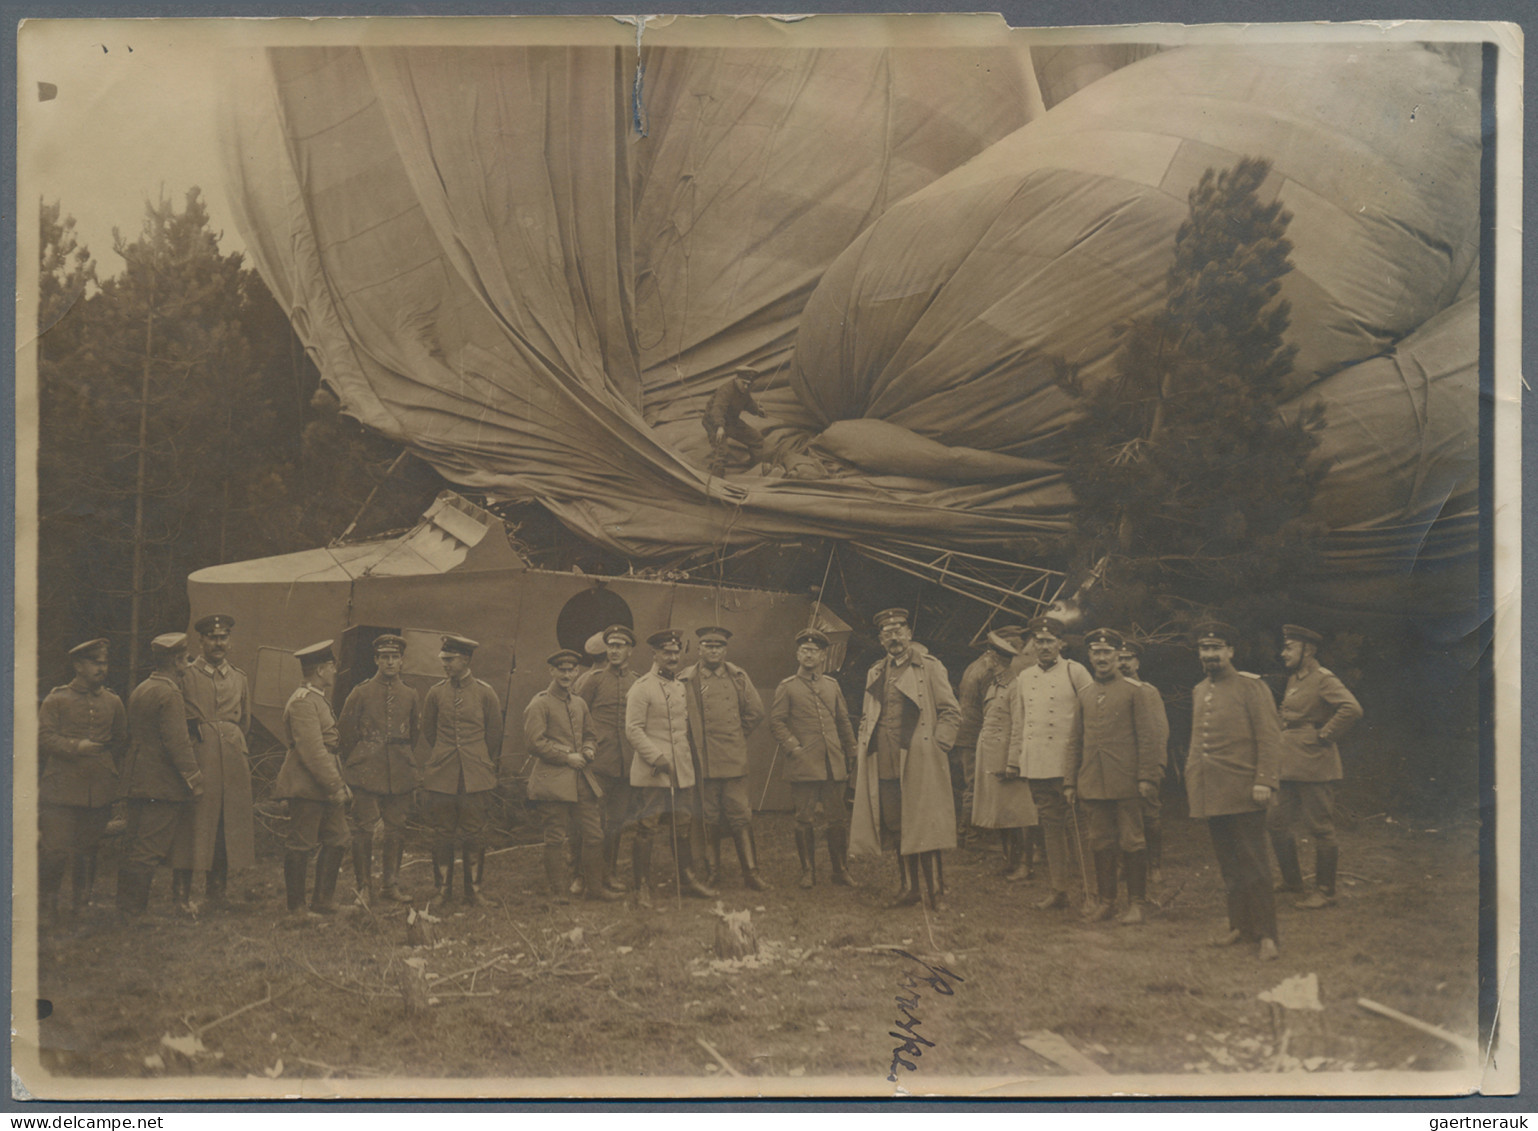 Thematics: zeppelin: 1915. Very rare series of four original, period photographs